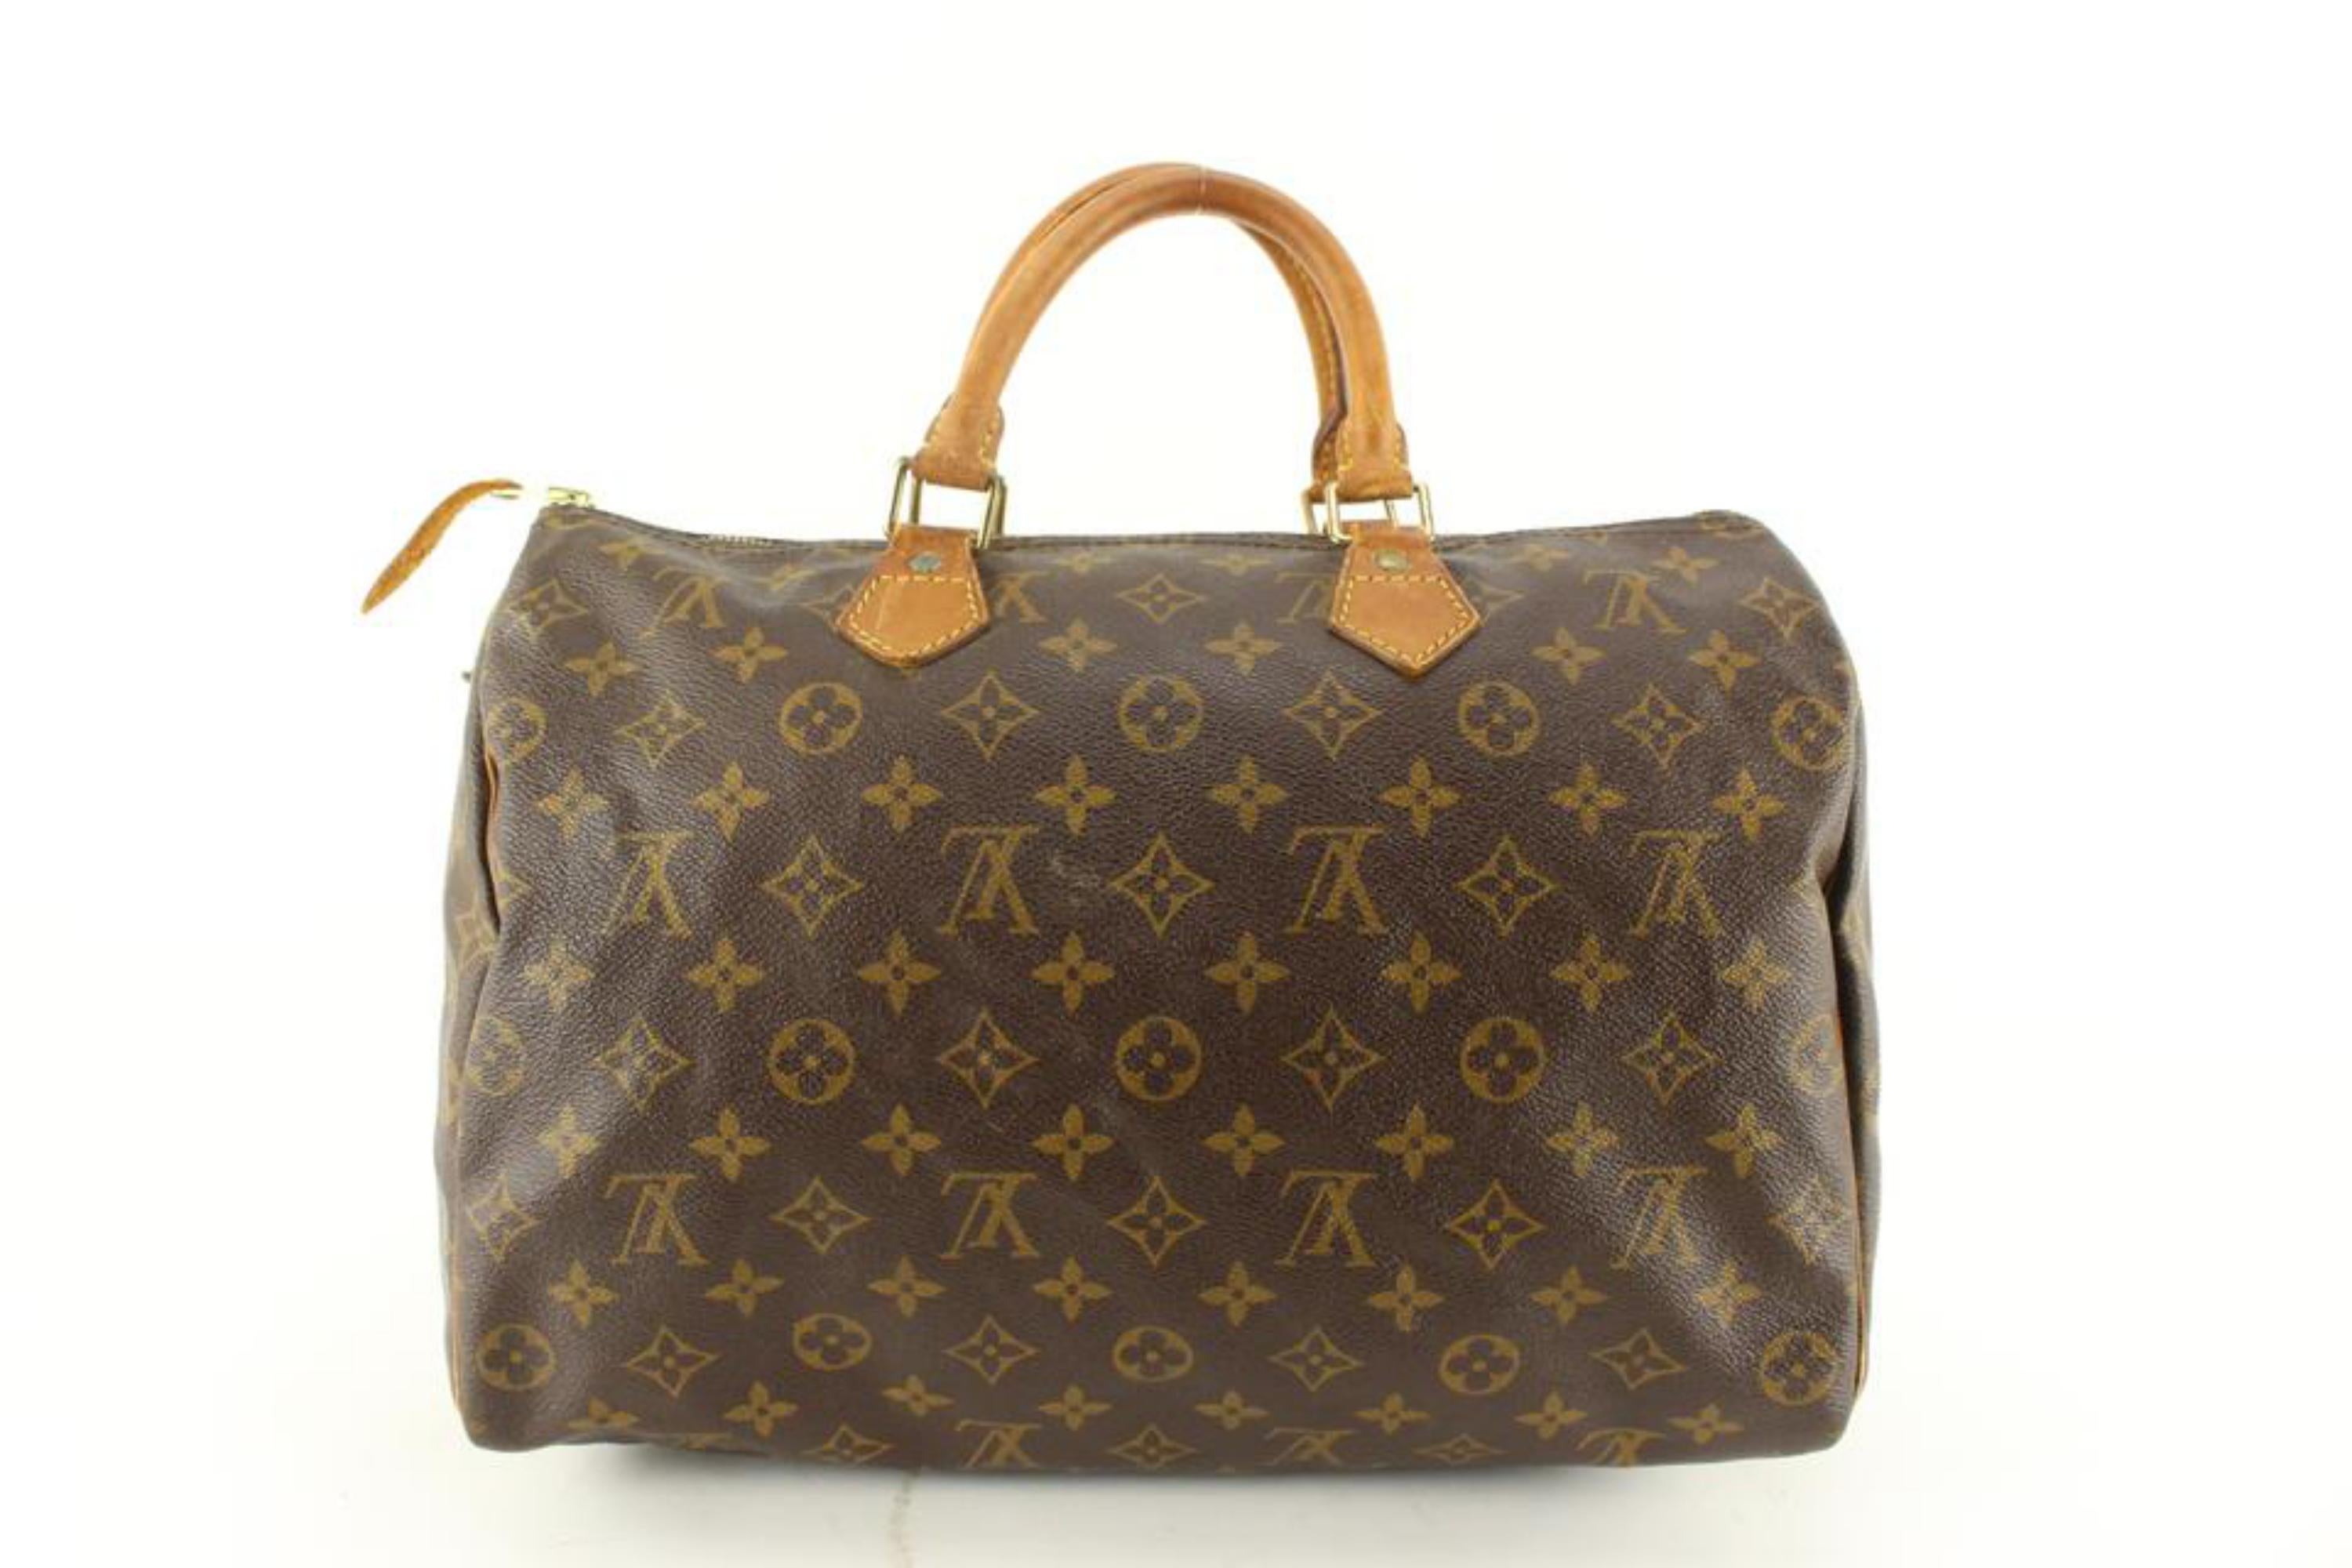 Louis Vuitton Monogram Speedy 35 Boston Bag 13lz712s For Sale 4